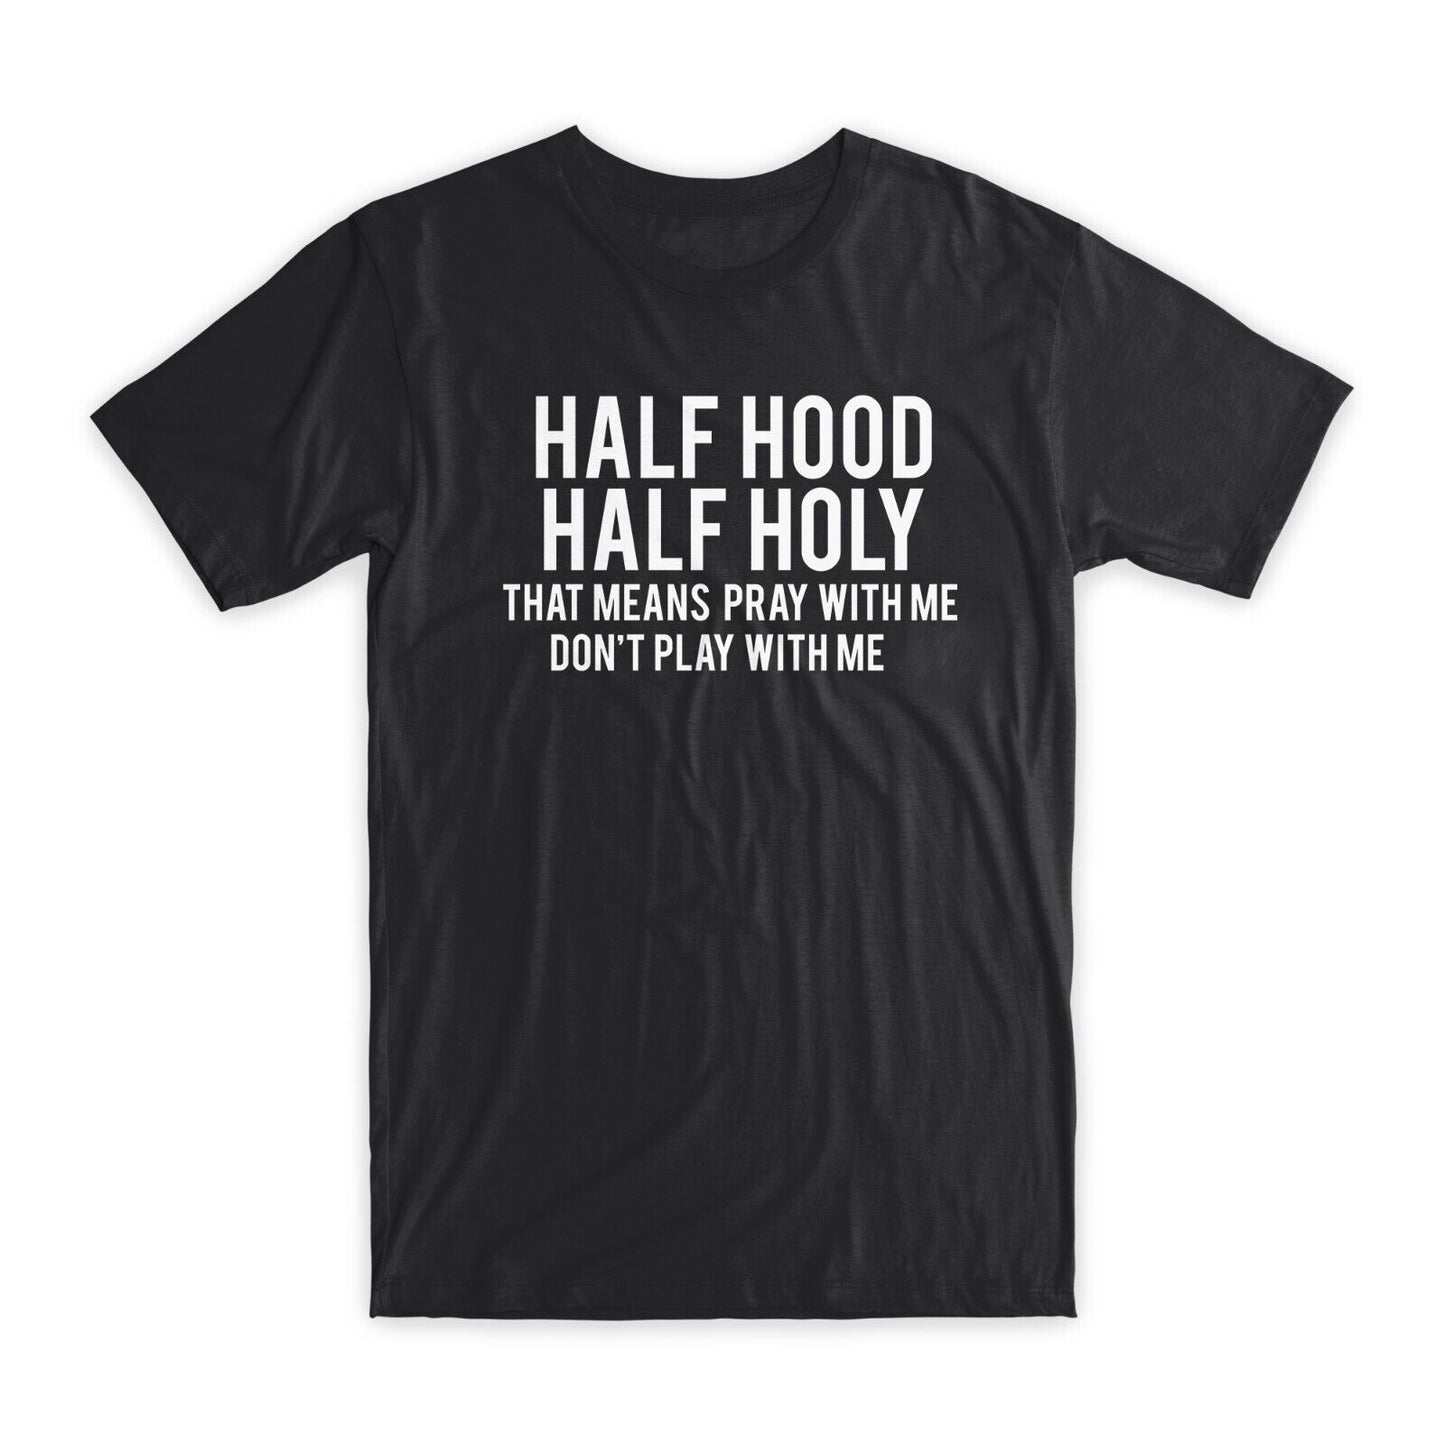 Half Hood Half Holy T-Shirt Premium Soft Cotton Crew Neck Funny Tees Gifts NEW